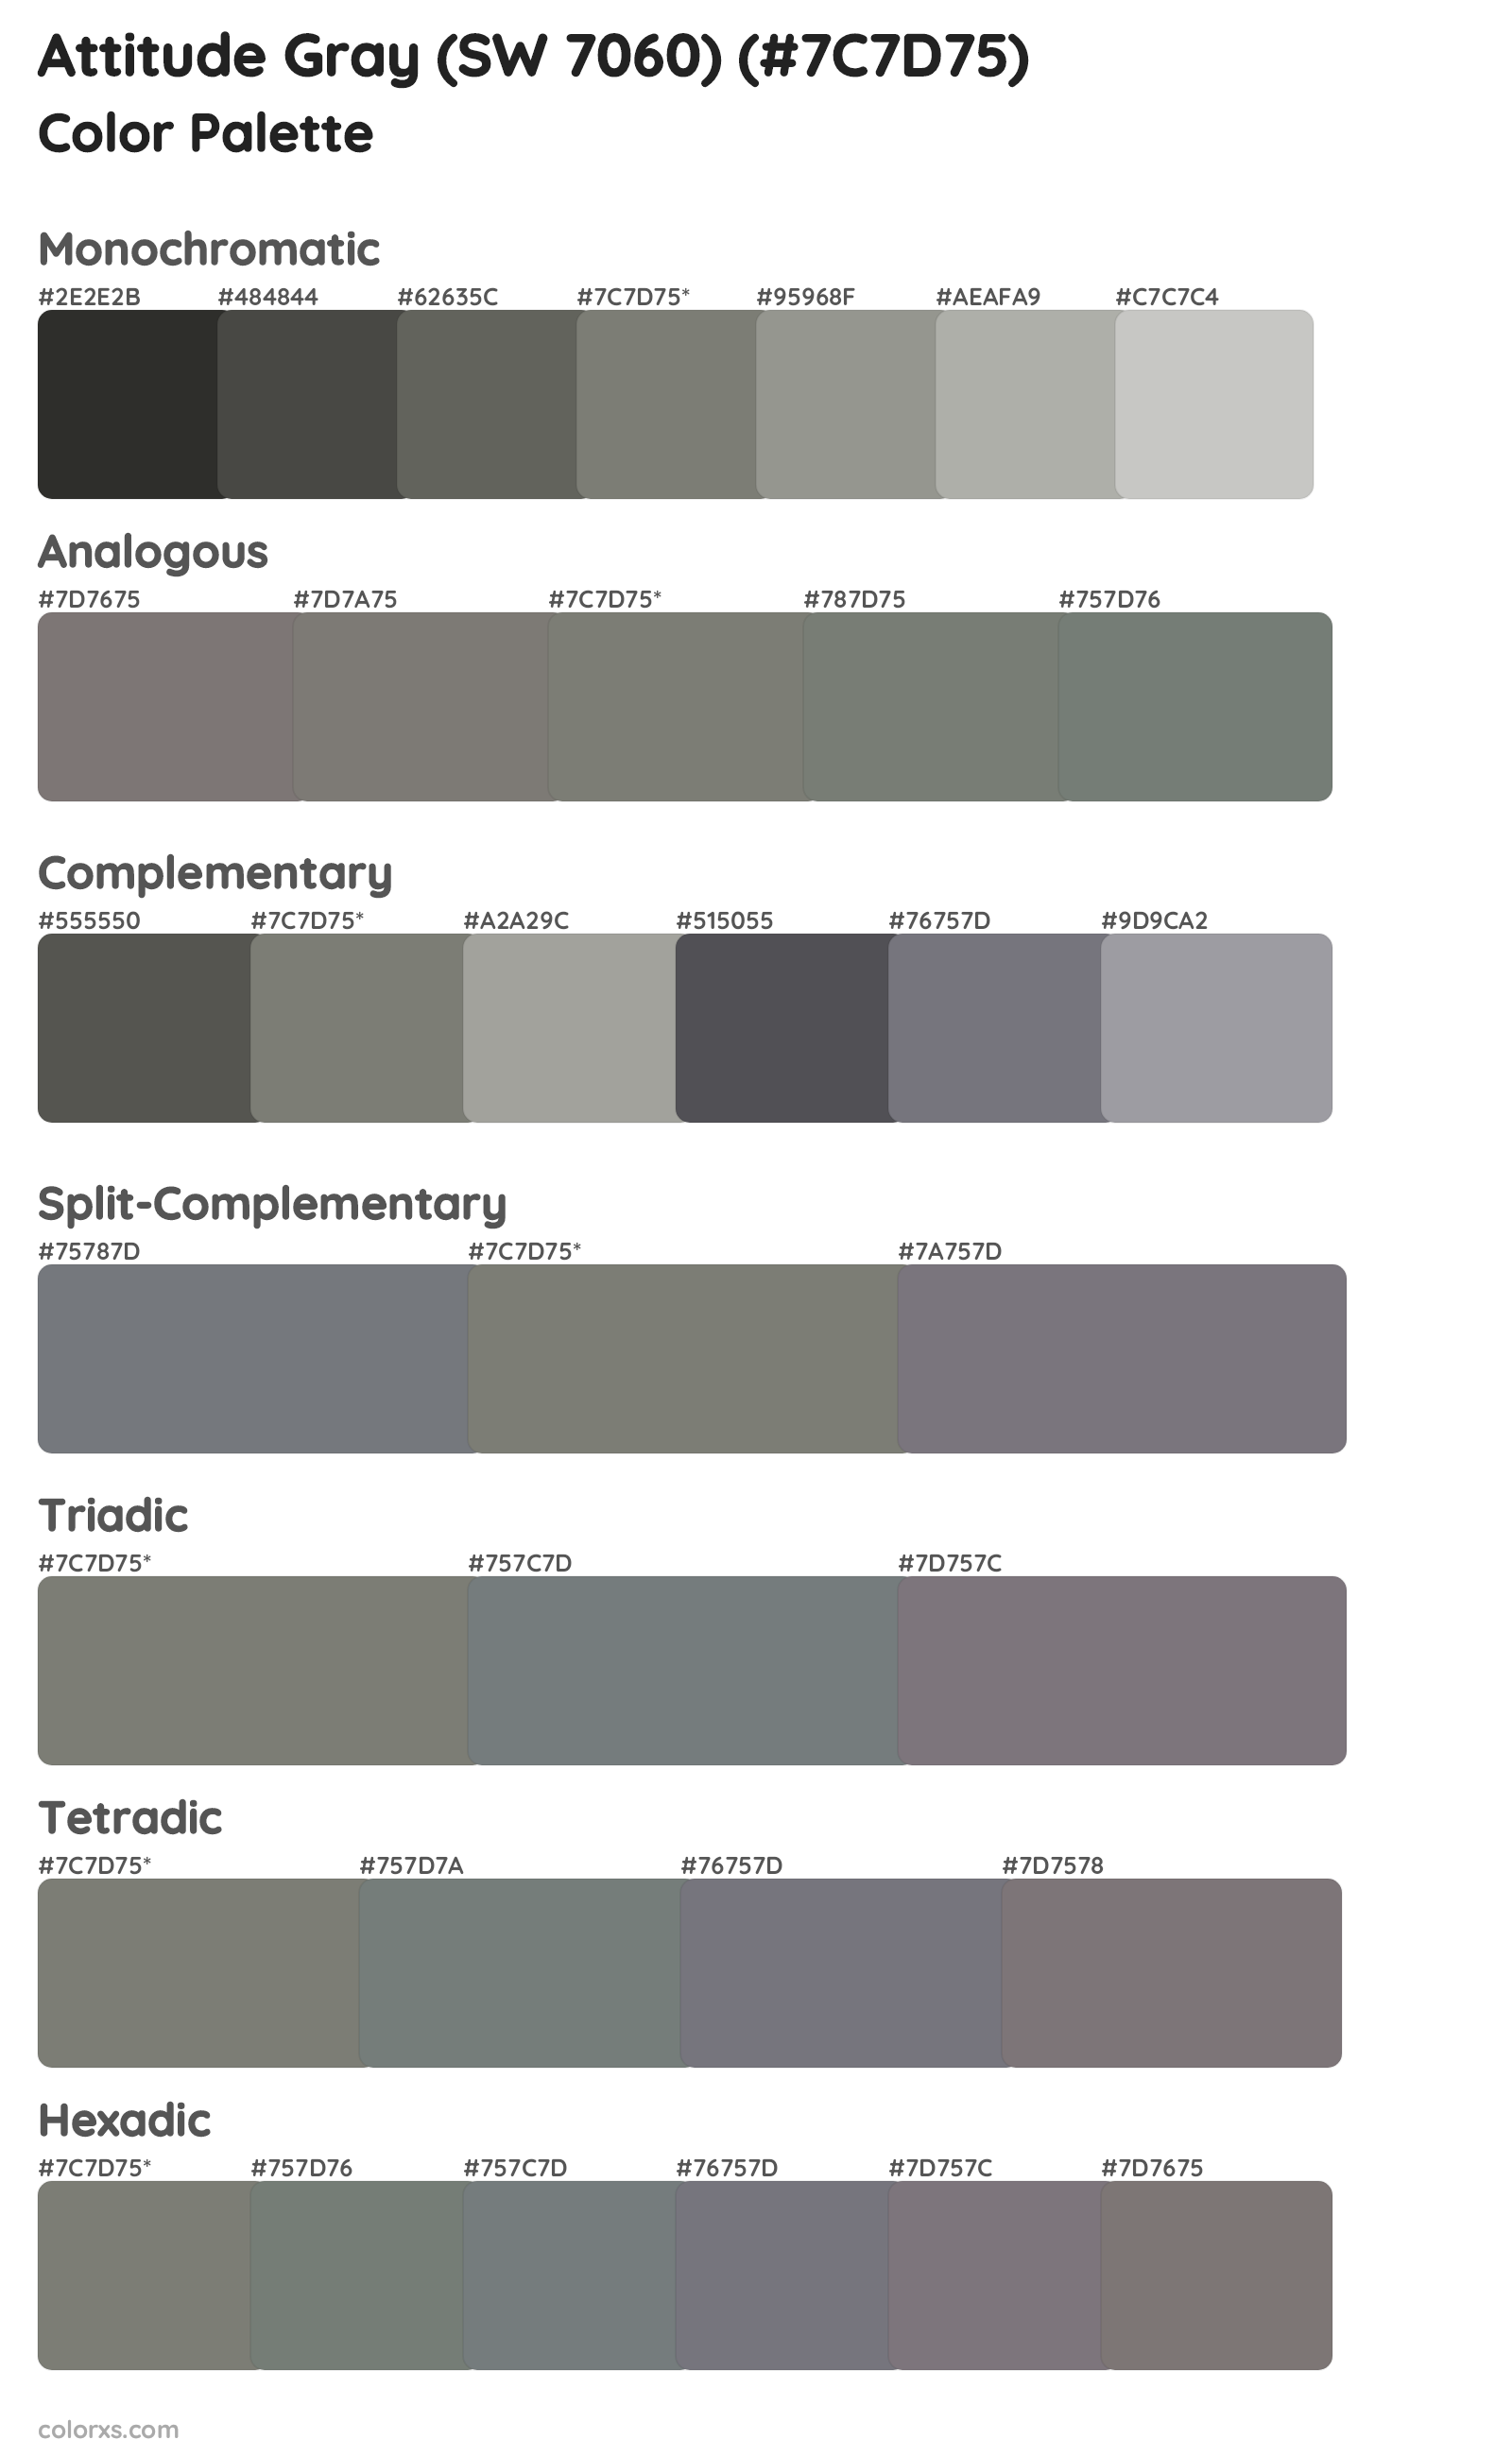 Attitude Gray (SW 7060) Color Scheme Palettes